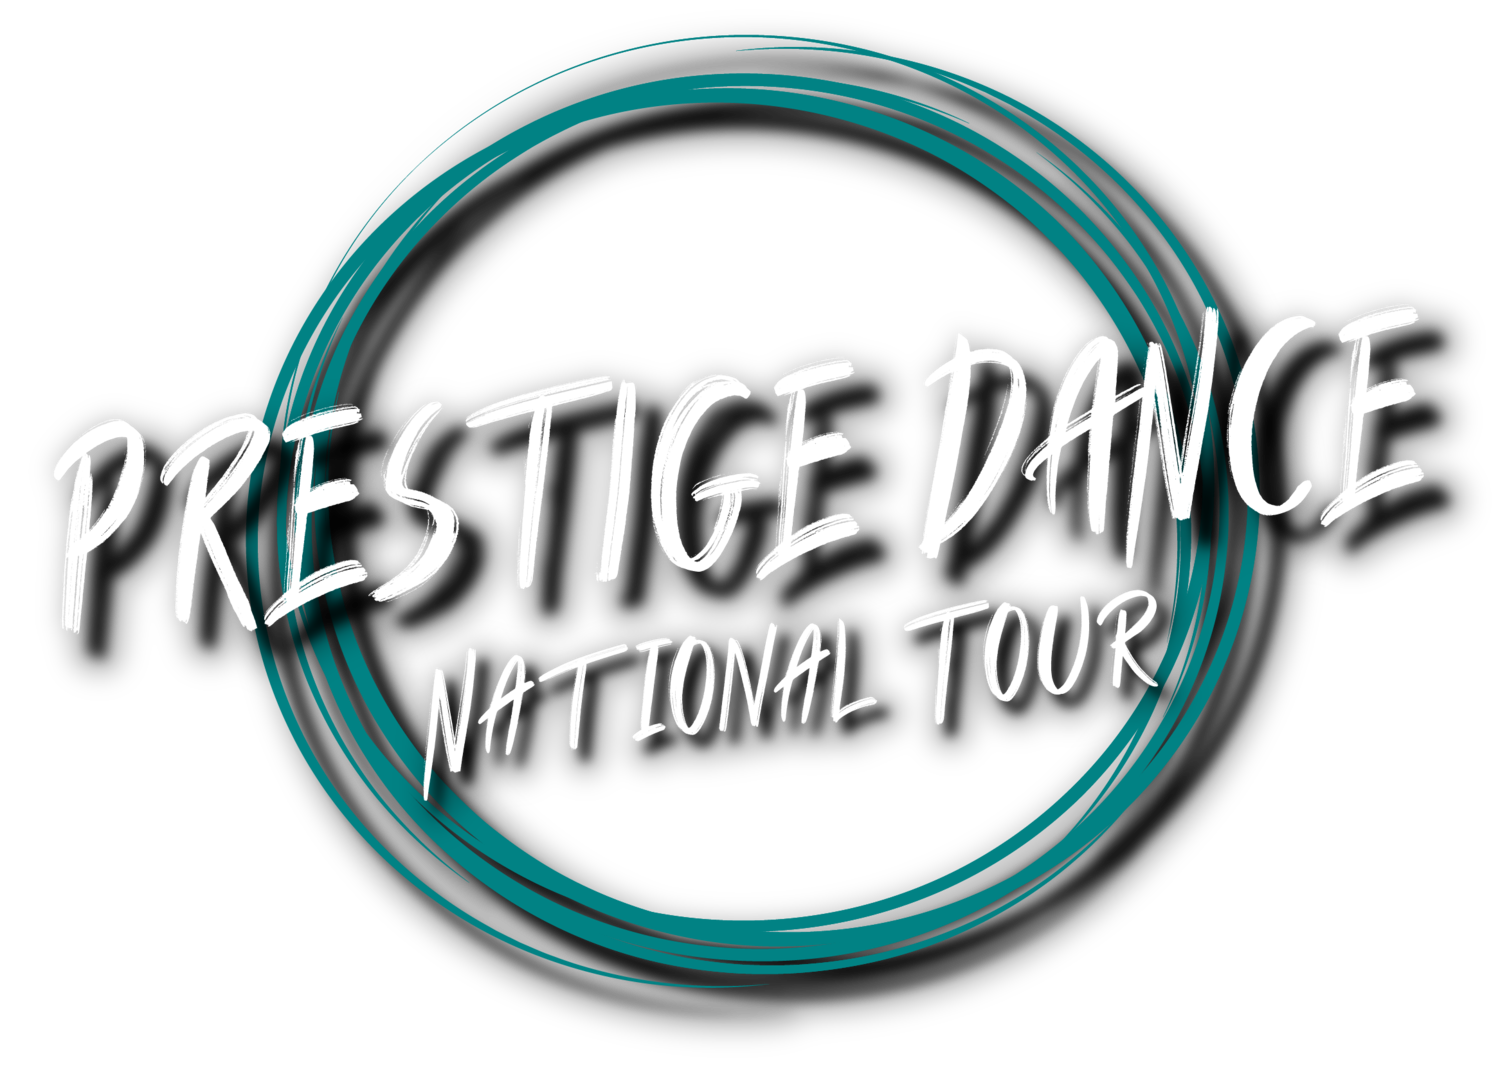    Prestige Dance National Tour